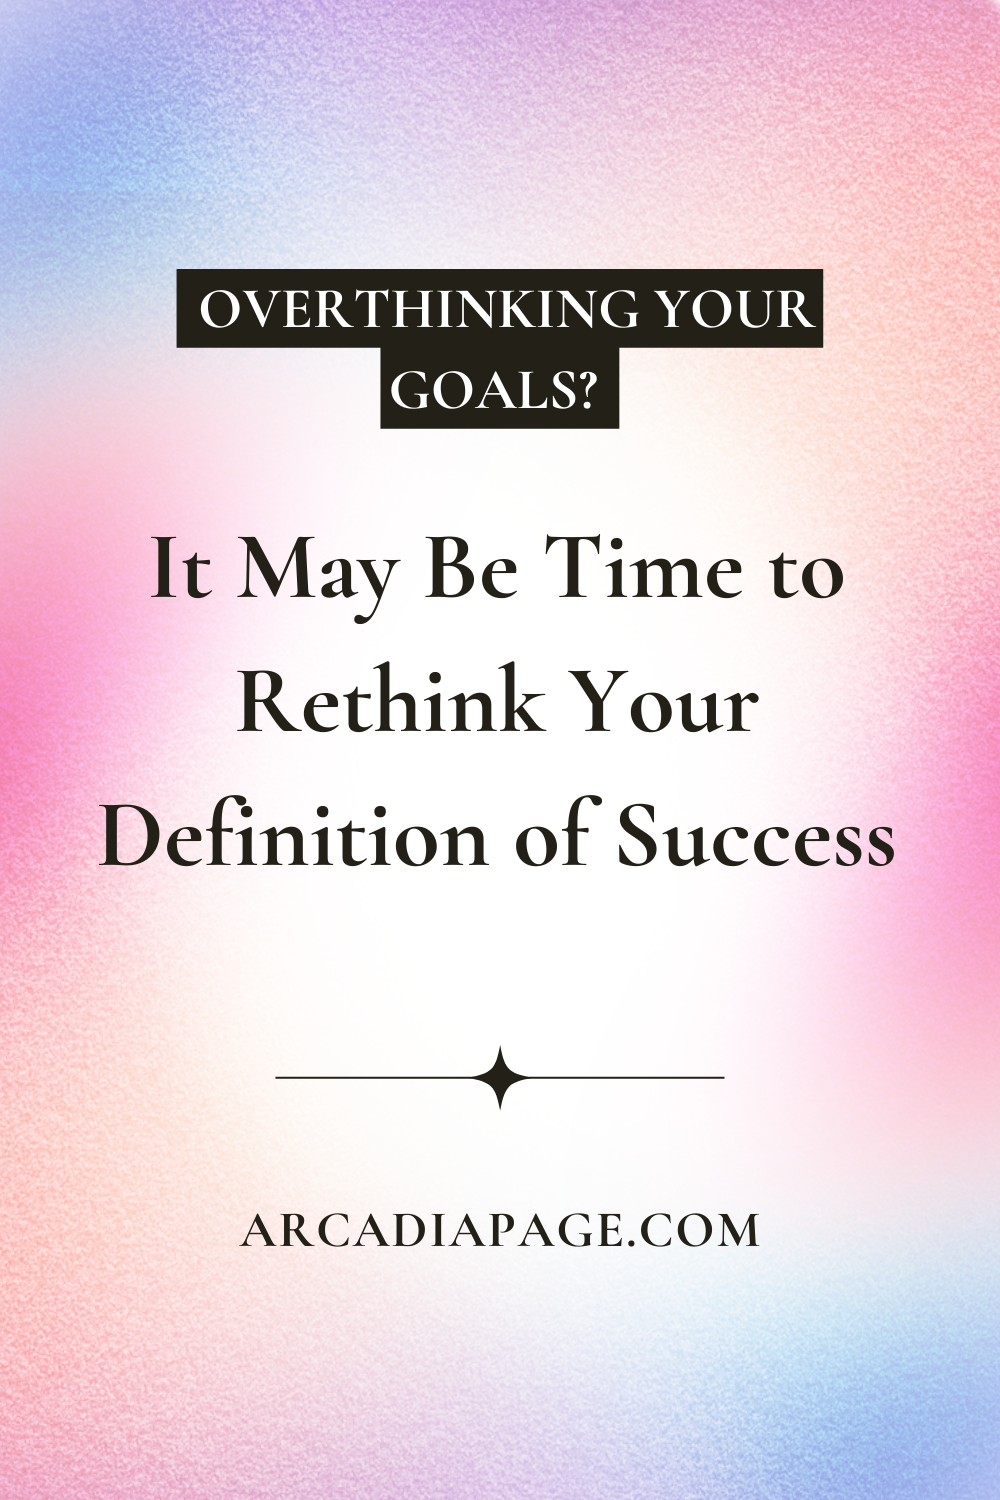 Overthinking your goals creates stress